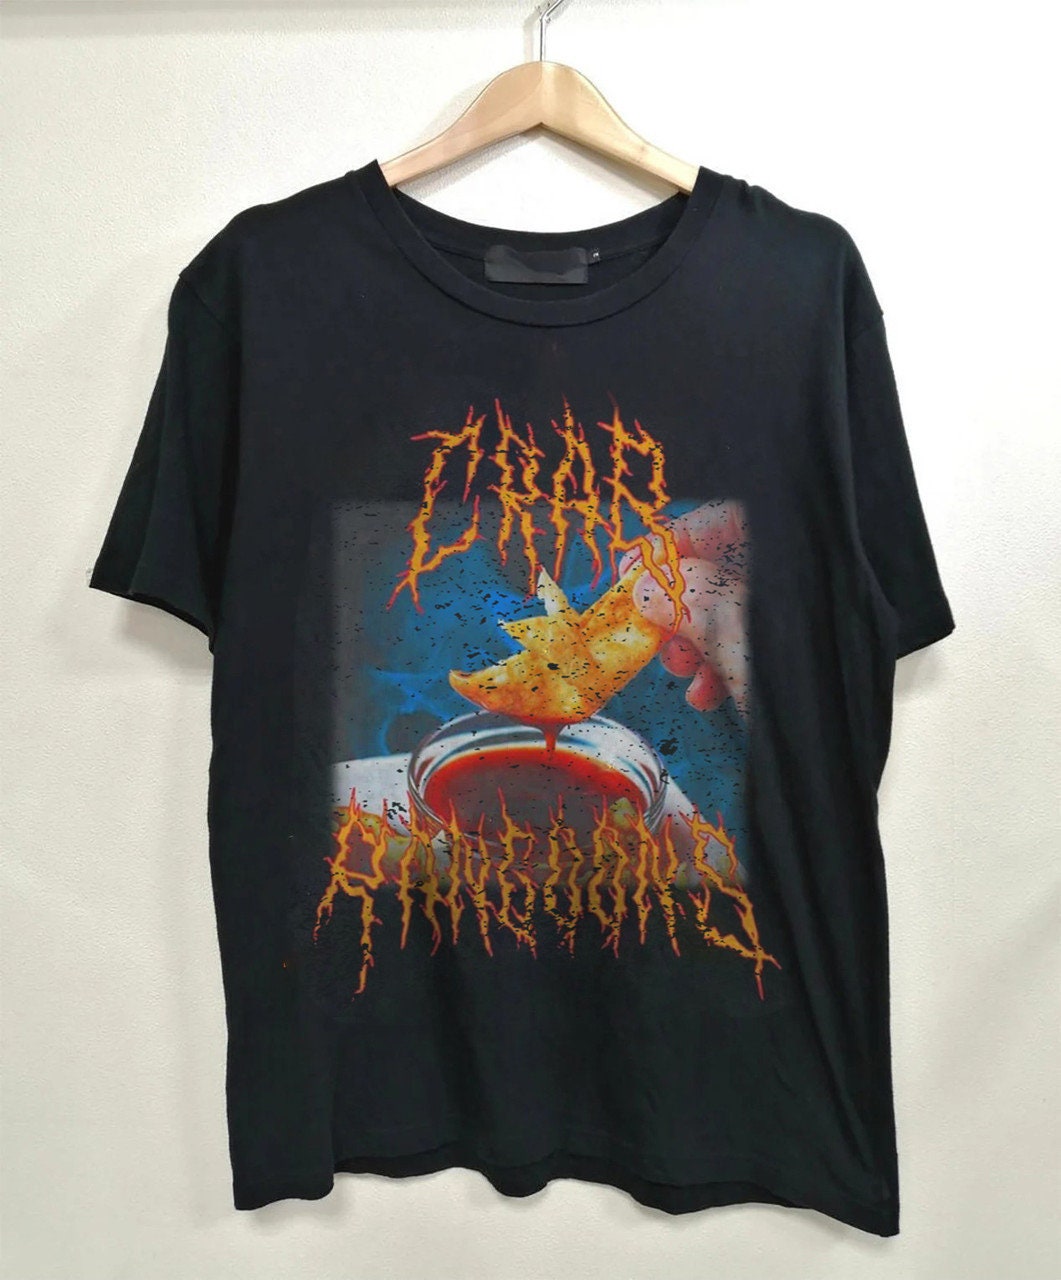 Discover Vintage Crab Rangoon Heavy Metal T-shirt, Crab Rangoon vintage shirt